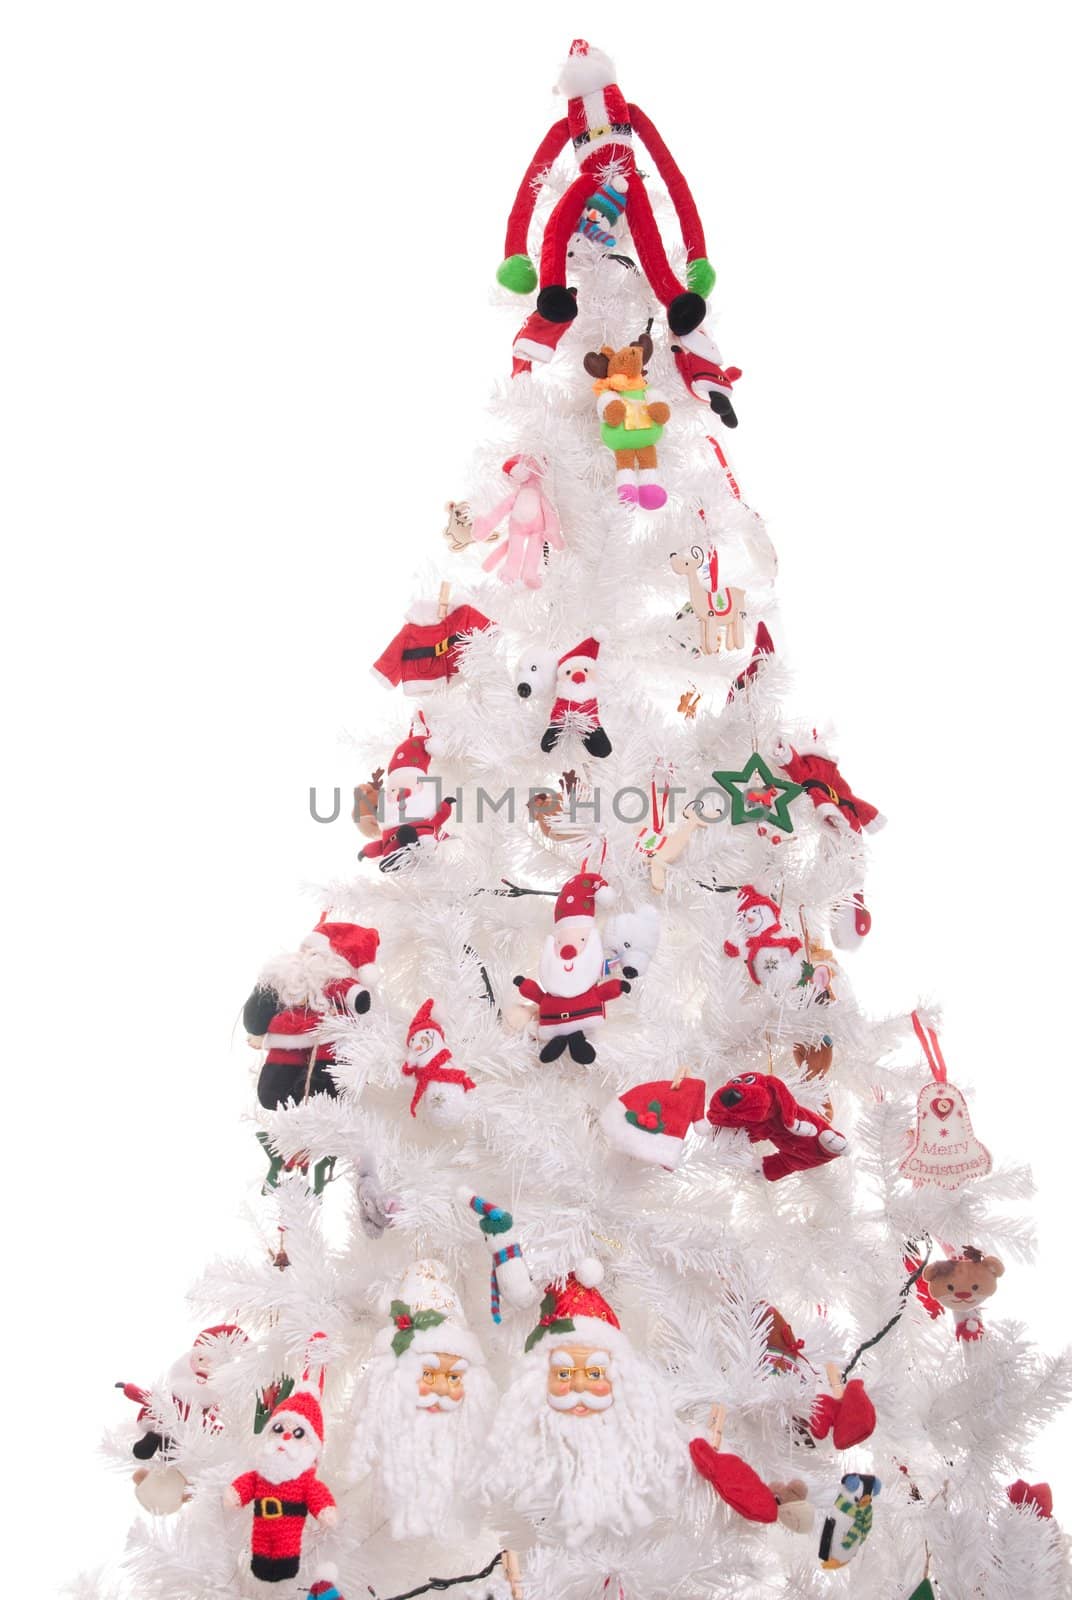 decorated christmas tree isolated on white background (white tree)